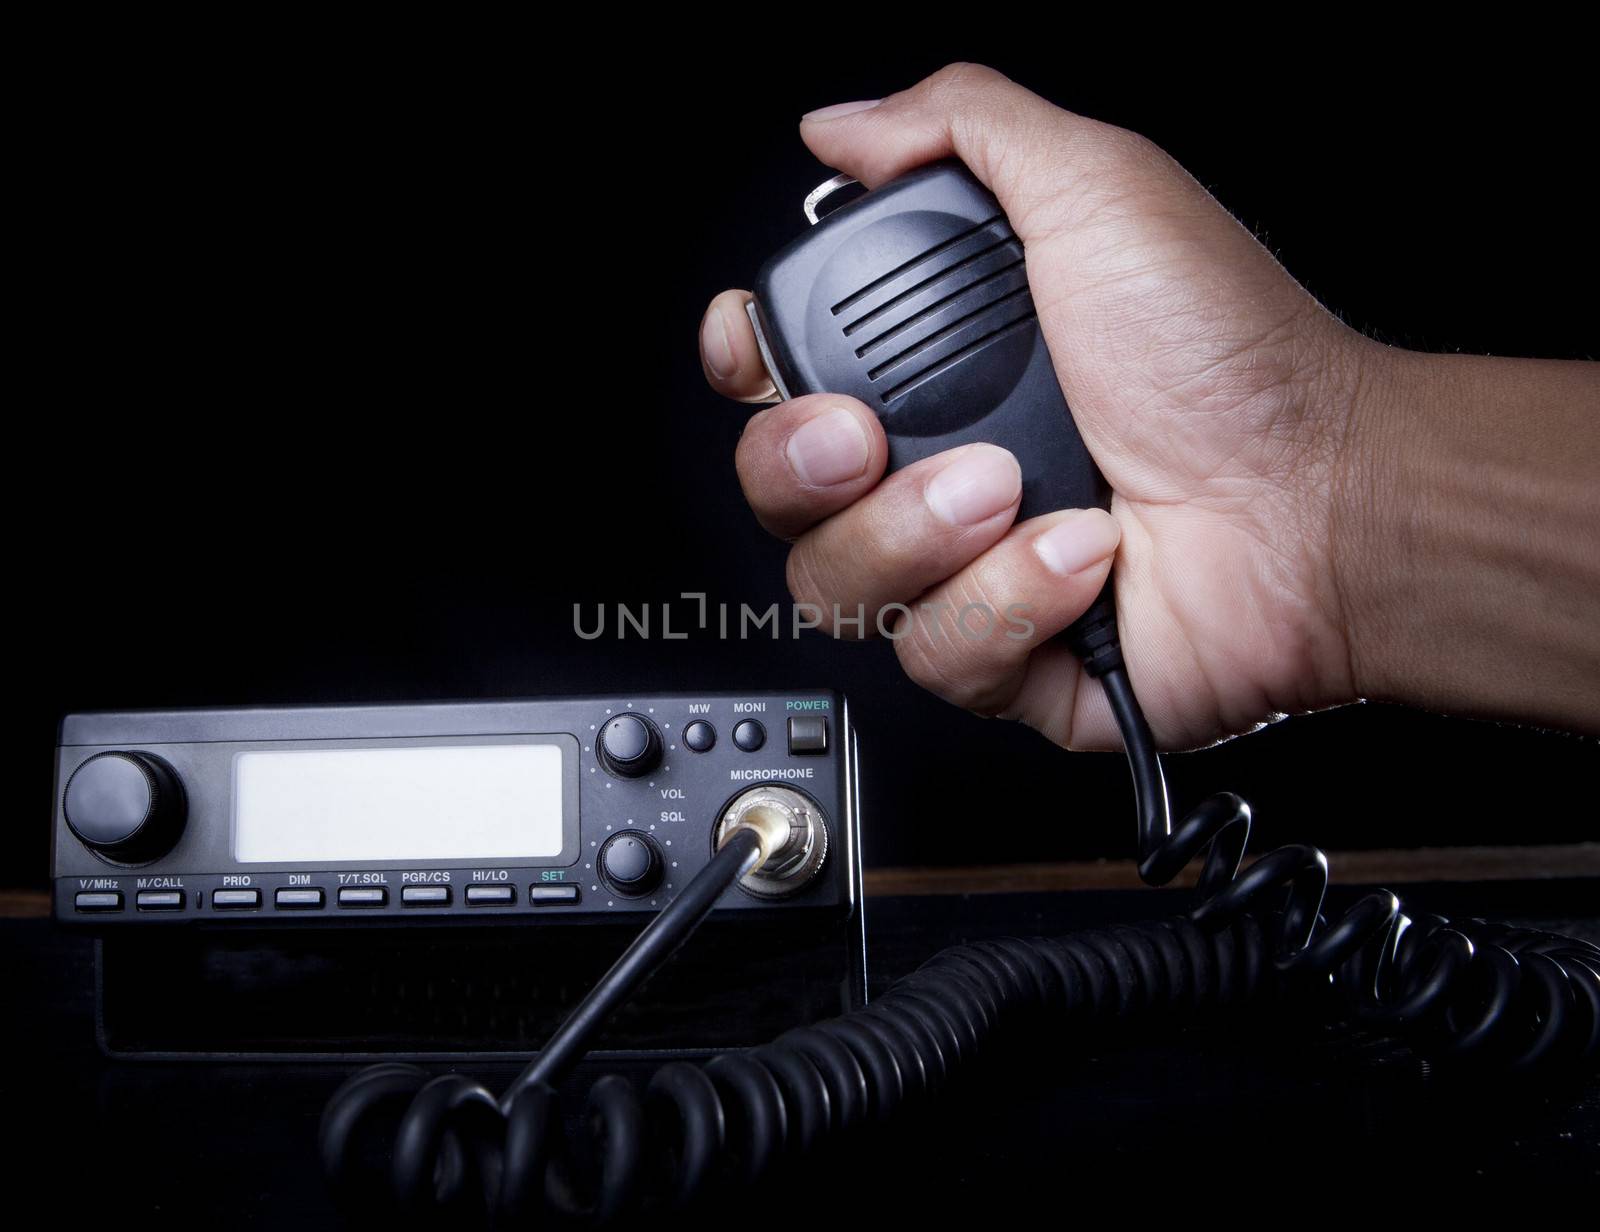 hand of Amateur radio holding speaker and press for radio communication theme